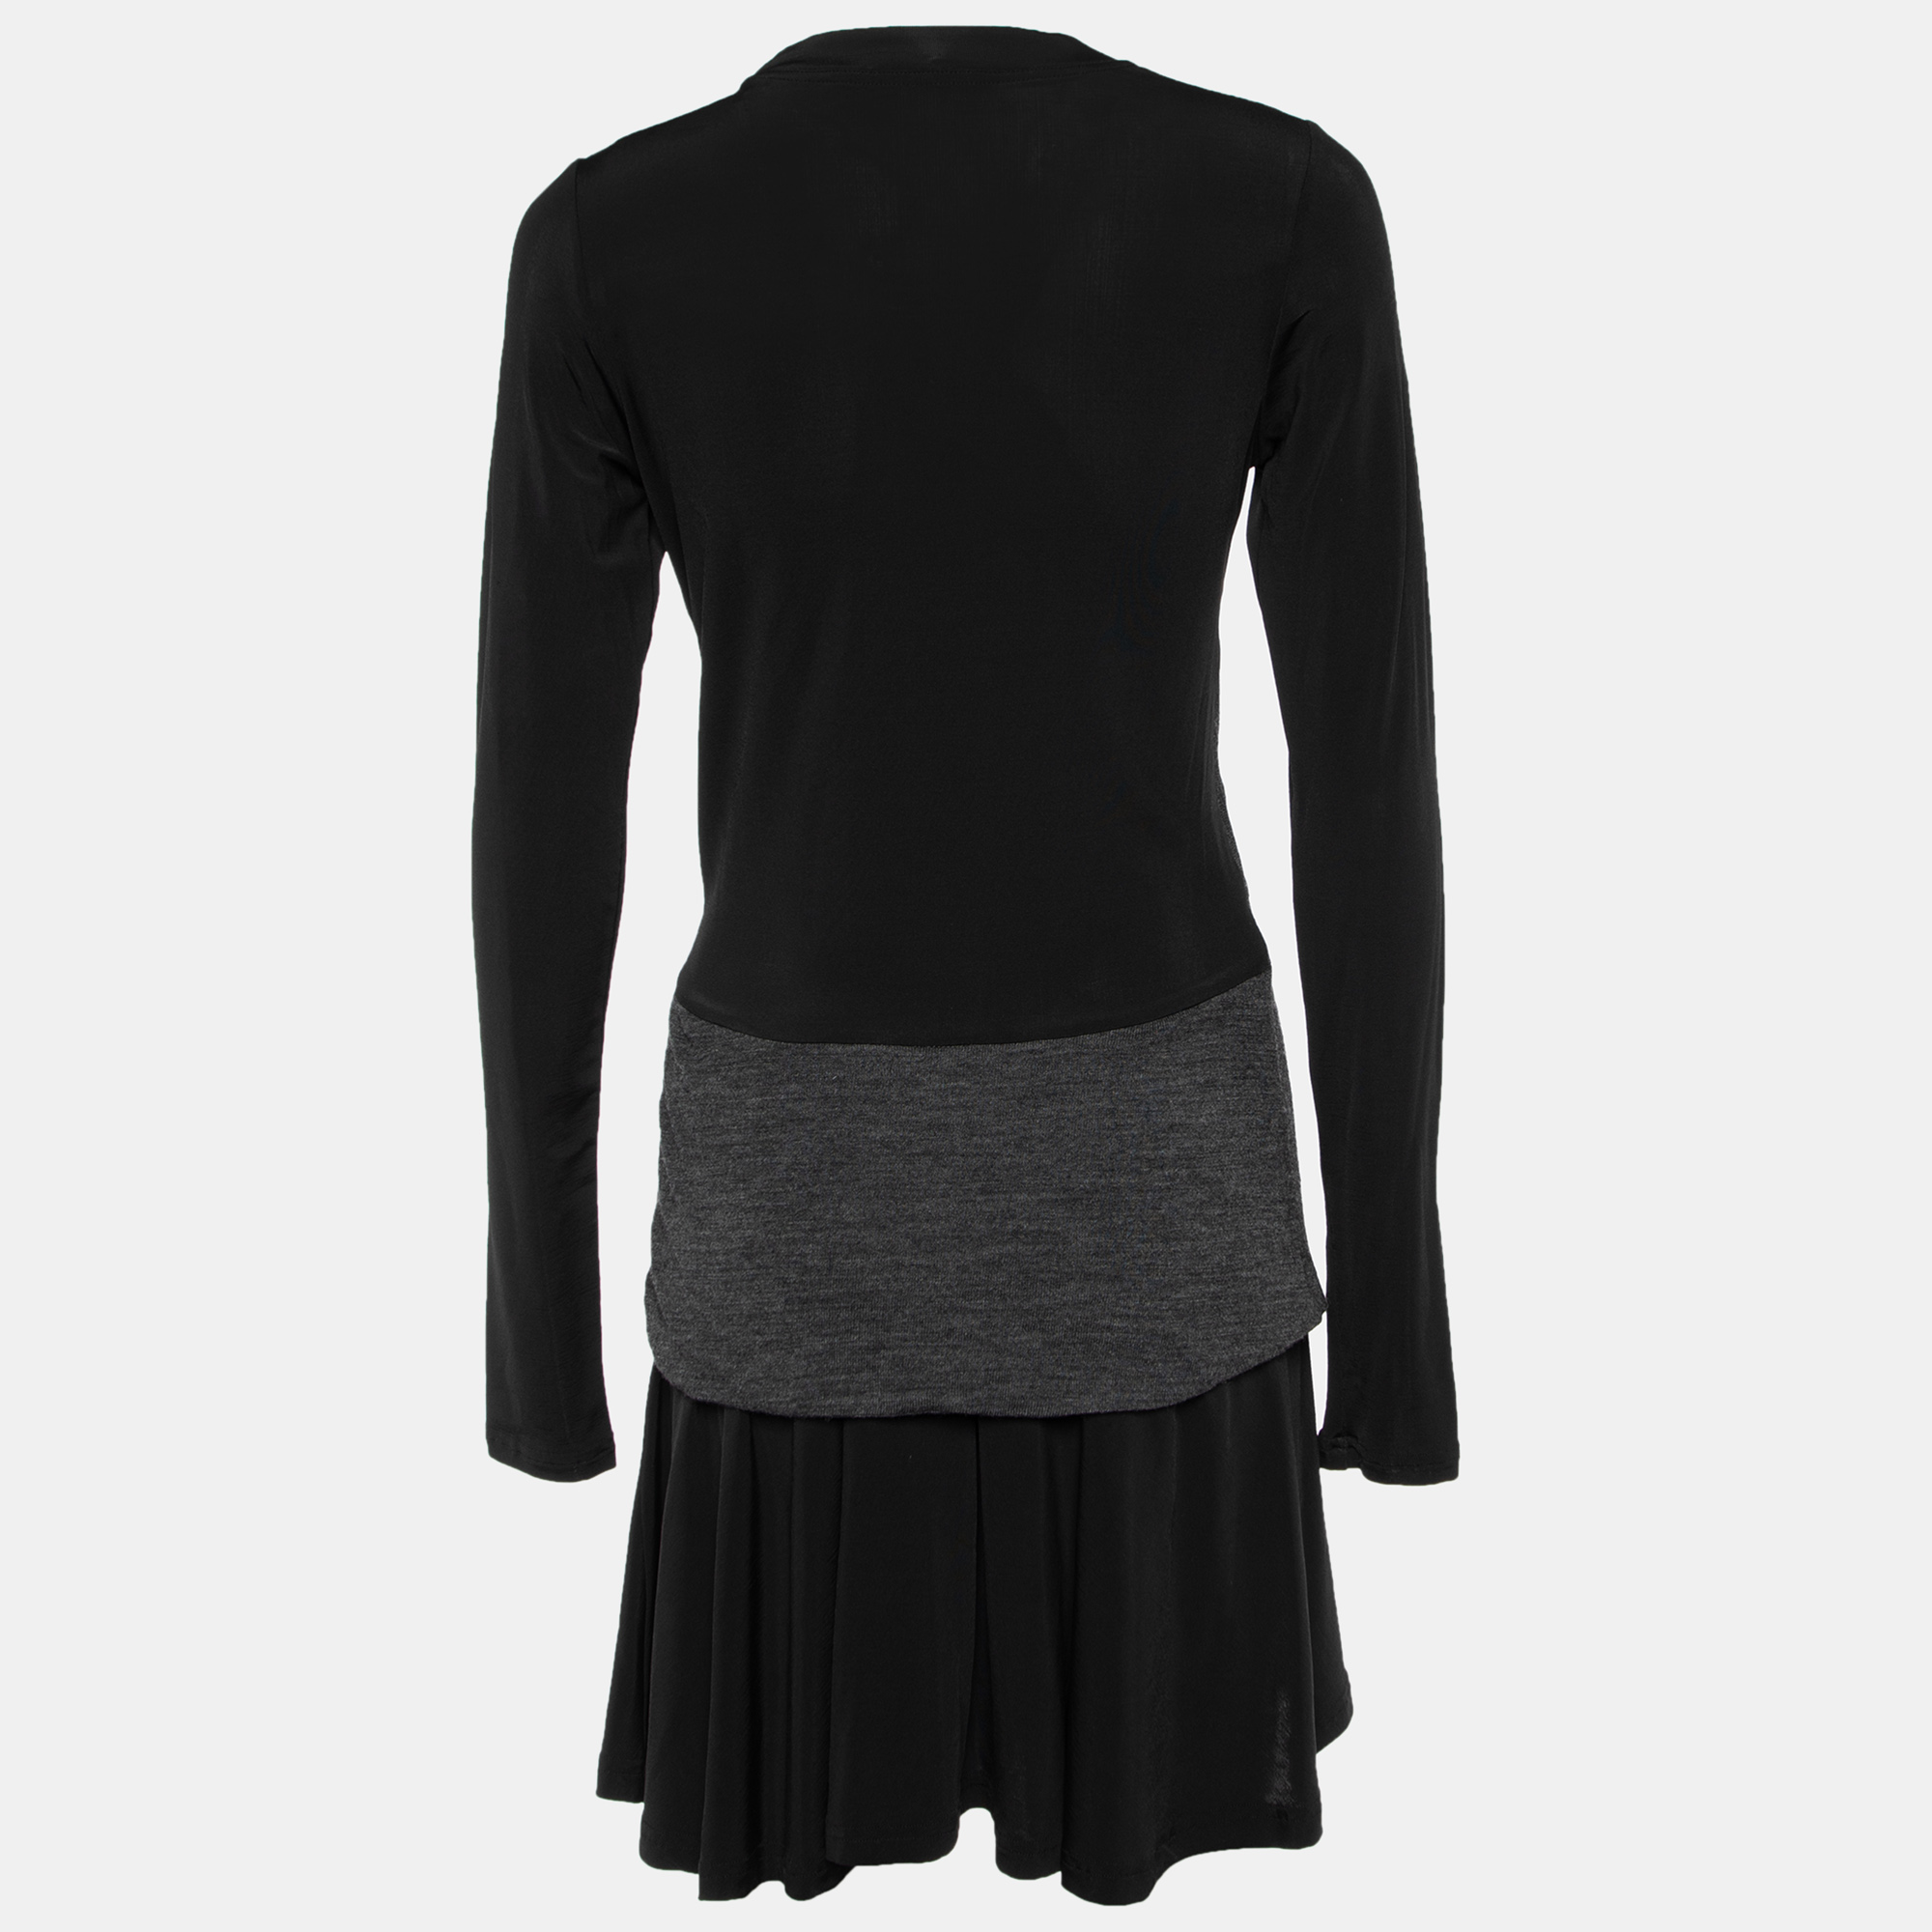 

Balenciaga Black Jersey & Grey Overlay Detail Mini Dress